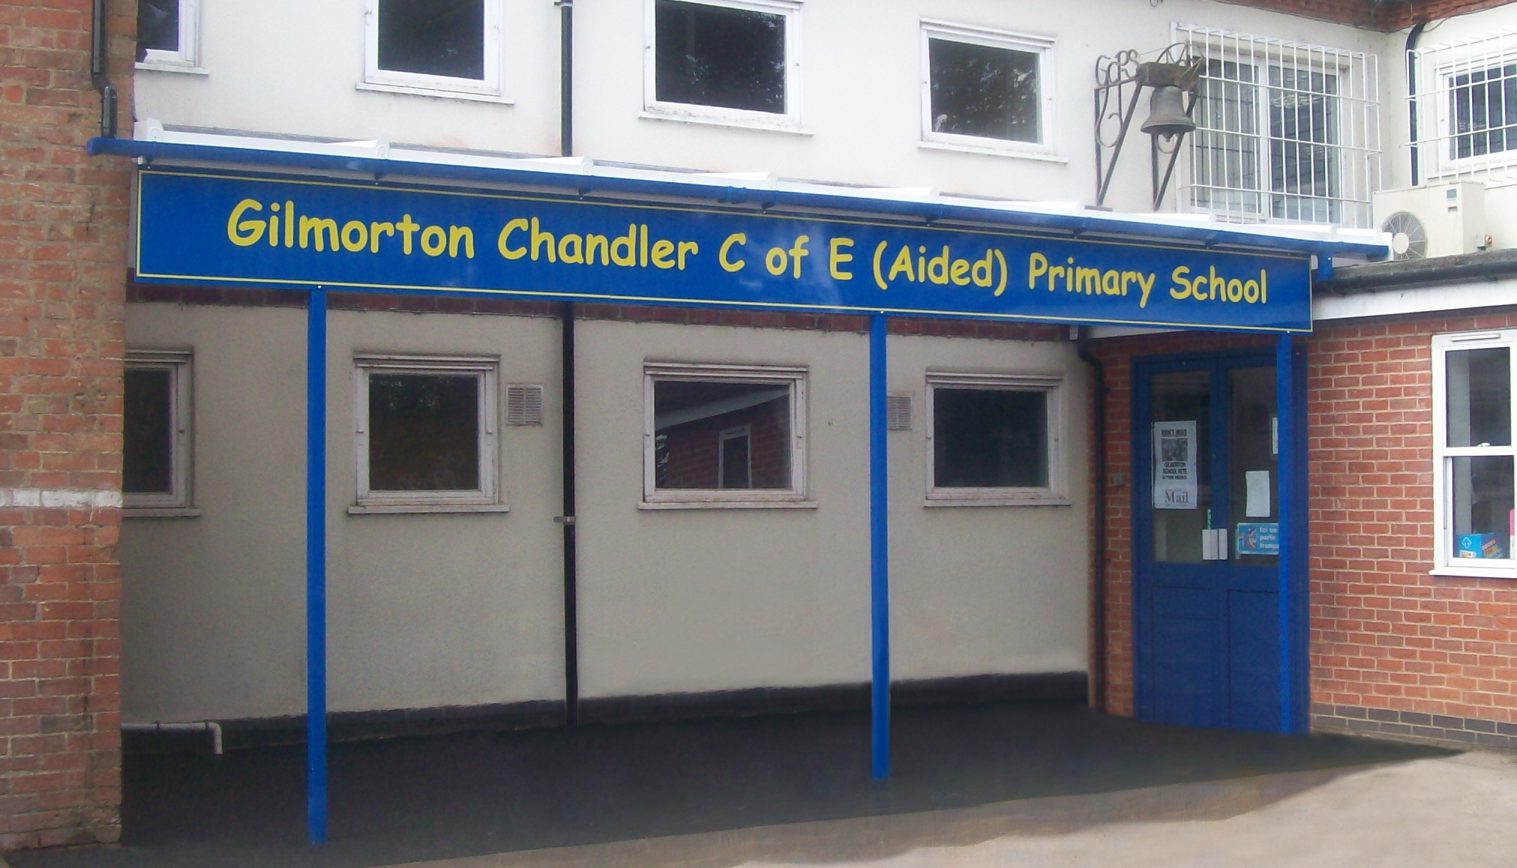 Gilmorton Chandler C of E Primary School